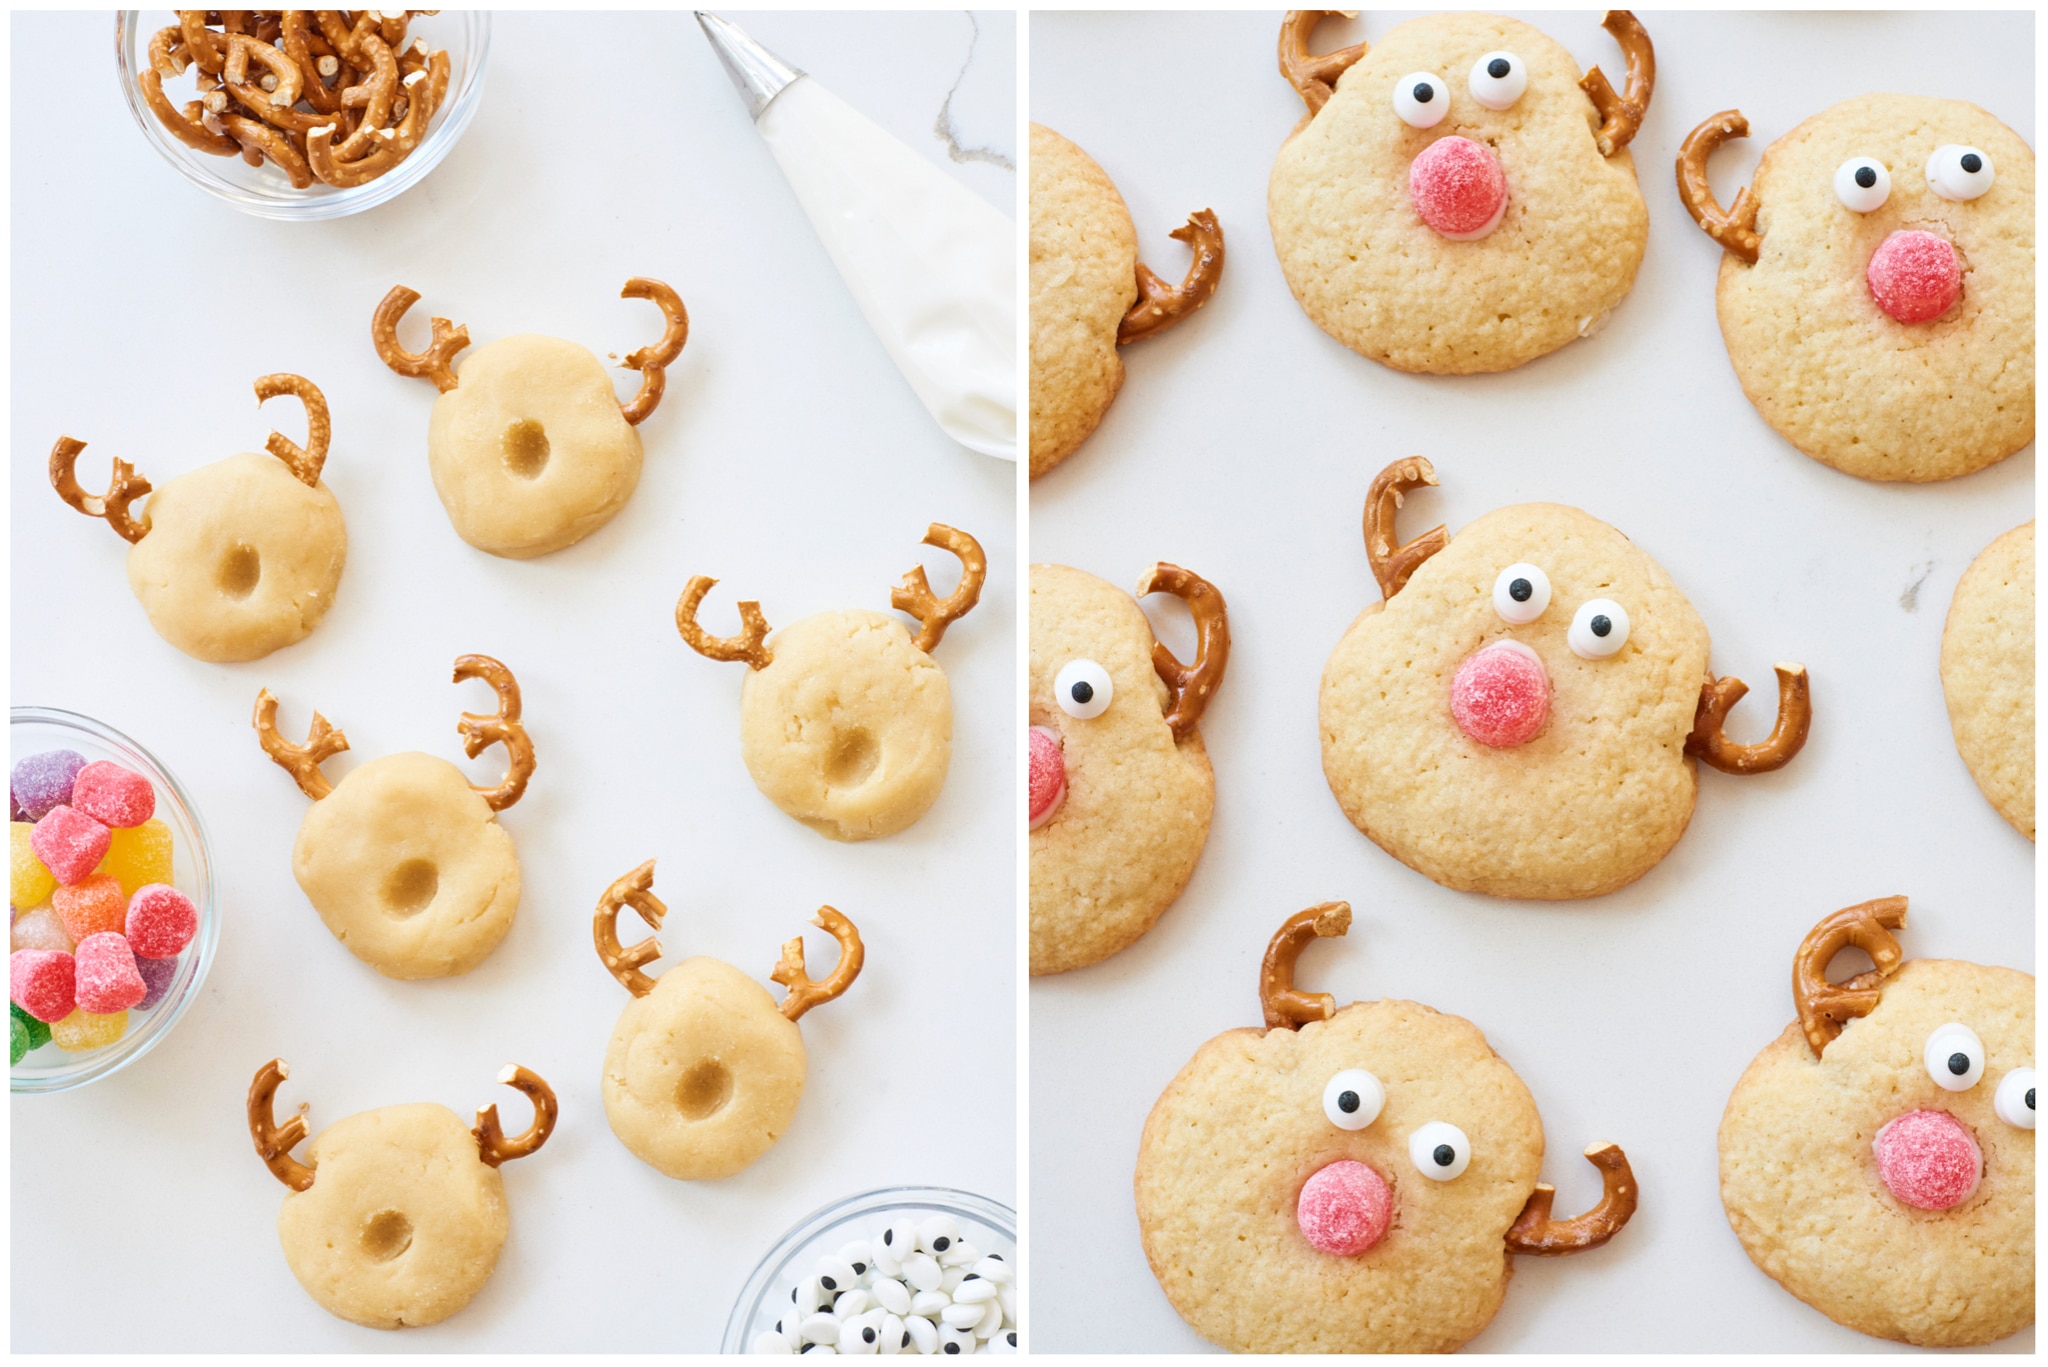 The stage of homemade Reindeer Cookies made with sugar cookie dough. The reindeer cookies have pretzel antlers, gumdrop noses, and edible eyeballs.